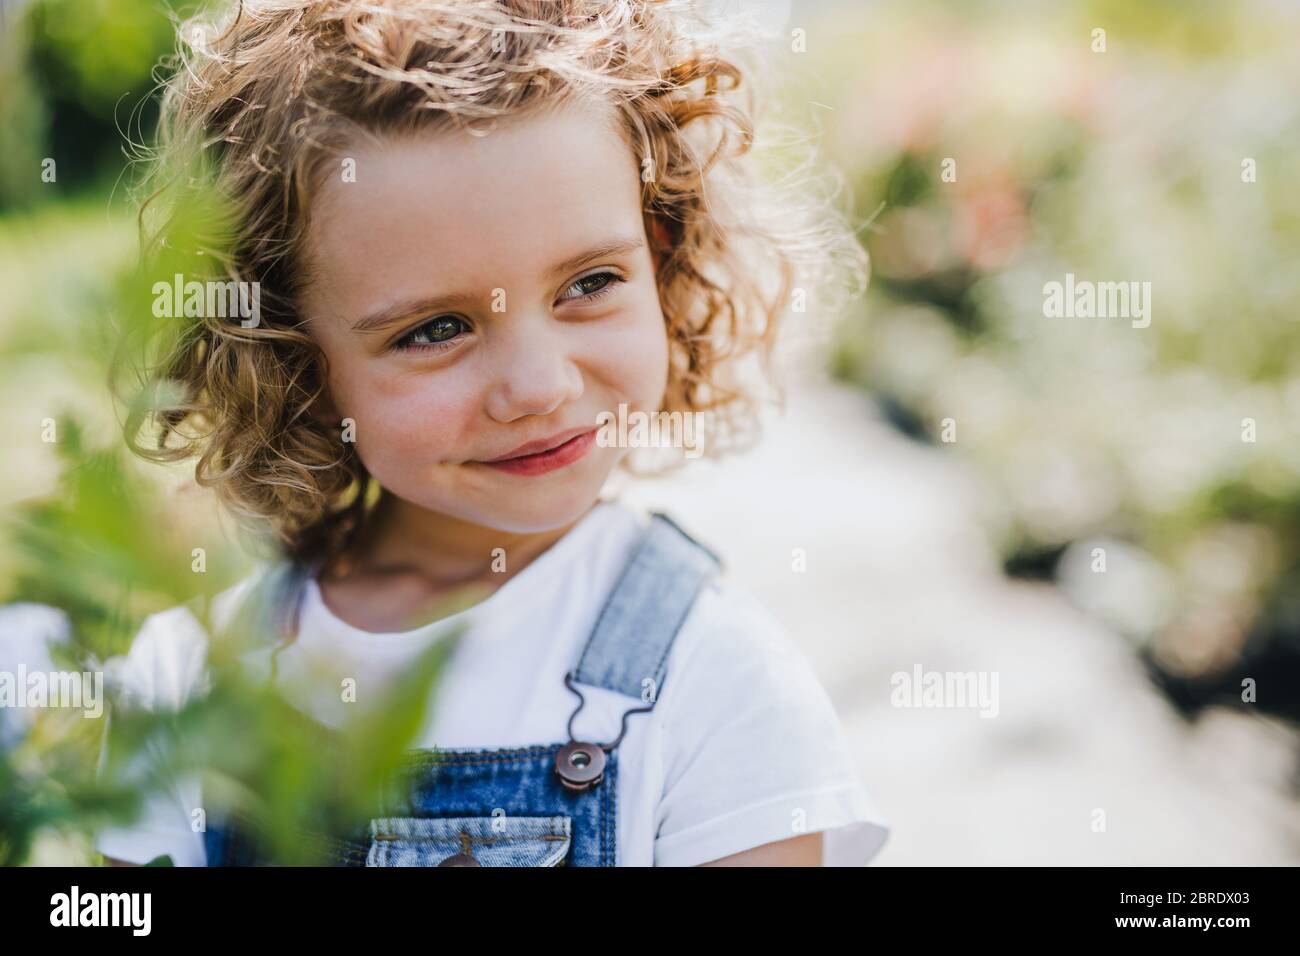 Portrait of small girl standing in the backyard garden Stock Photo - Alamy